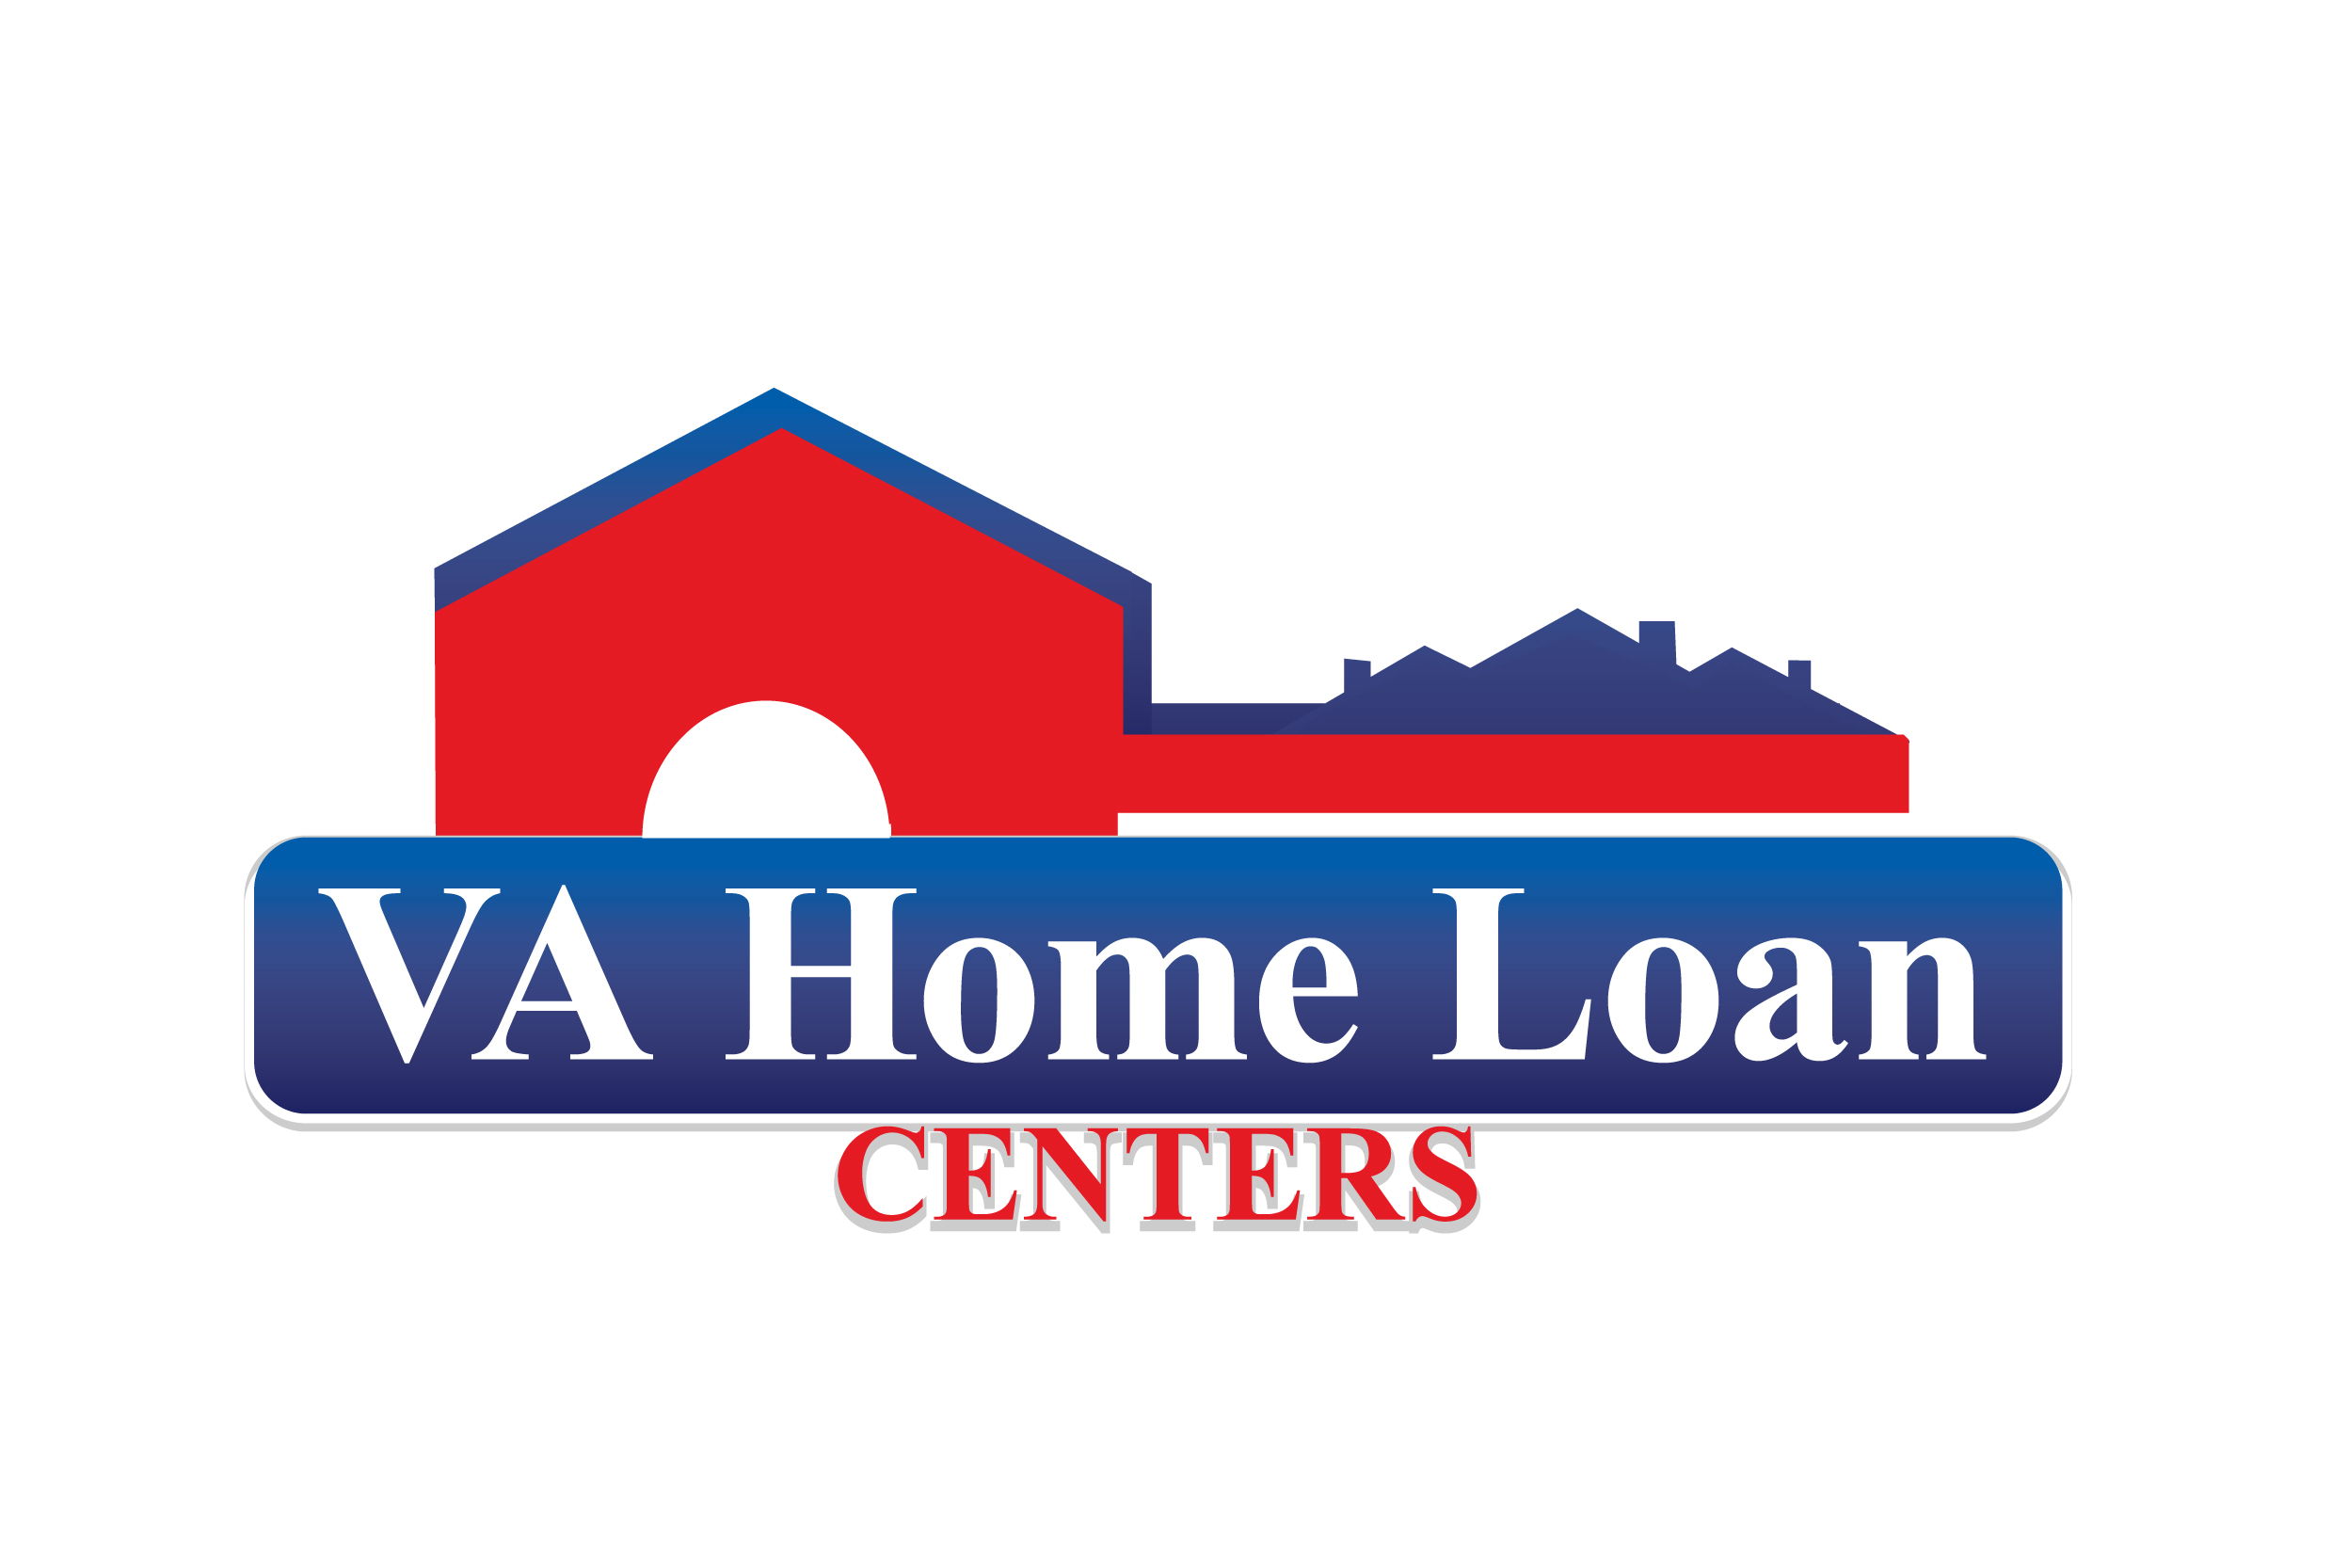 VA Home Loan Centers Announces Increase in 2012 Q4 Short Sale Applications